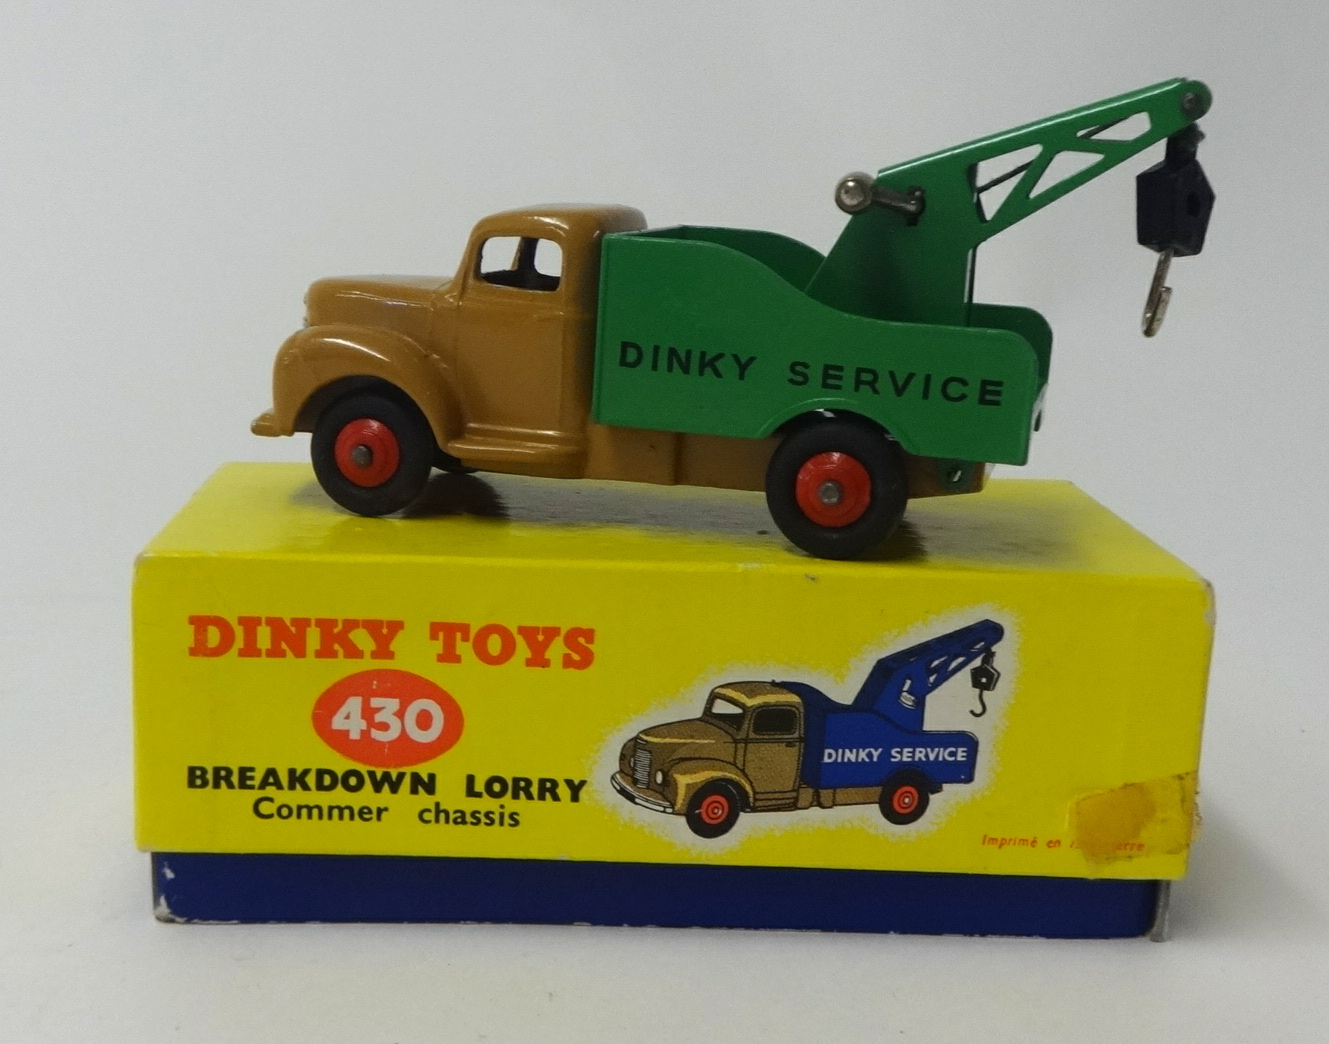 Dinky Toys 4360 Breakdown Lorry boxed.